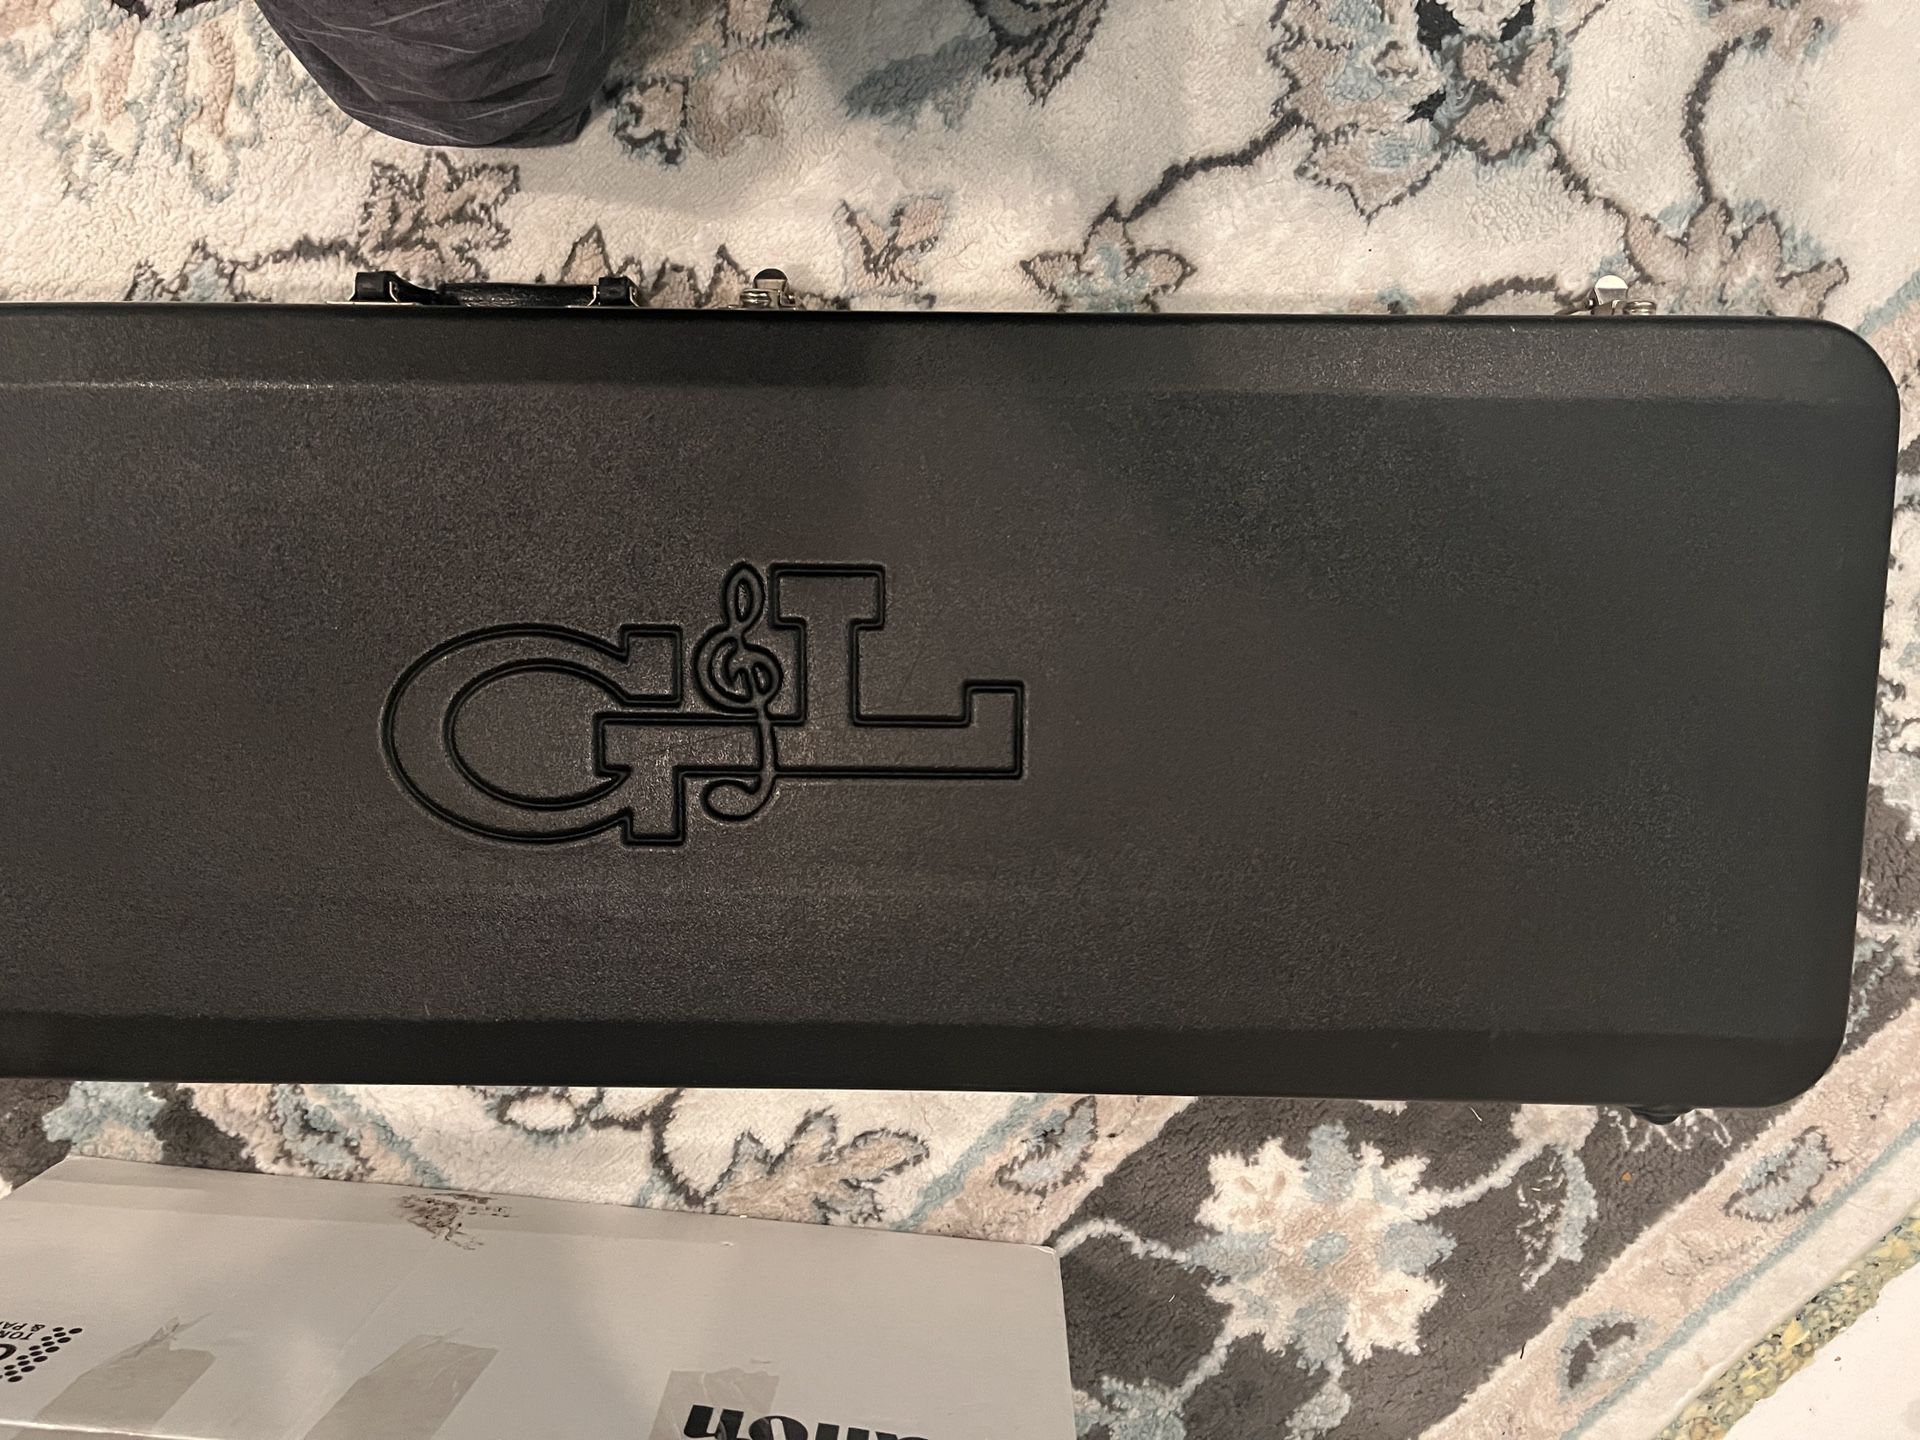 G&L Hard shell Guitar  Case 